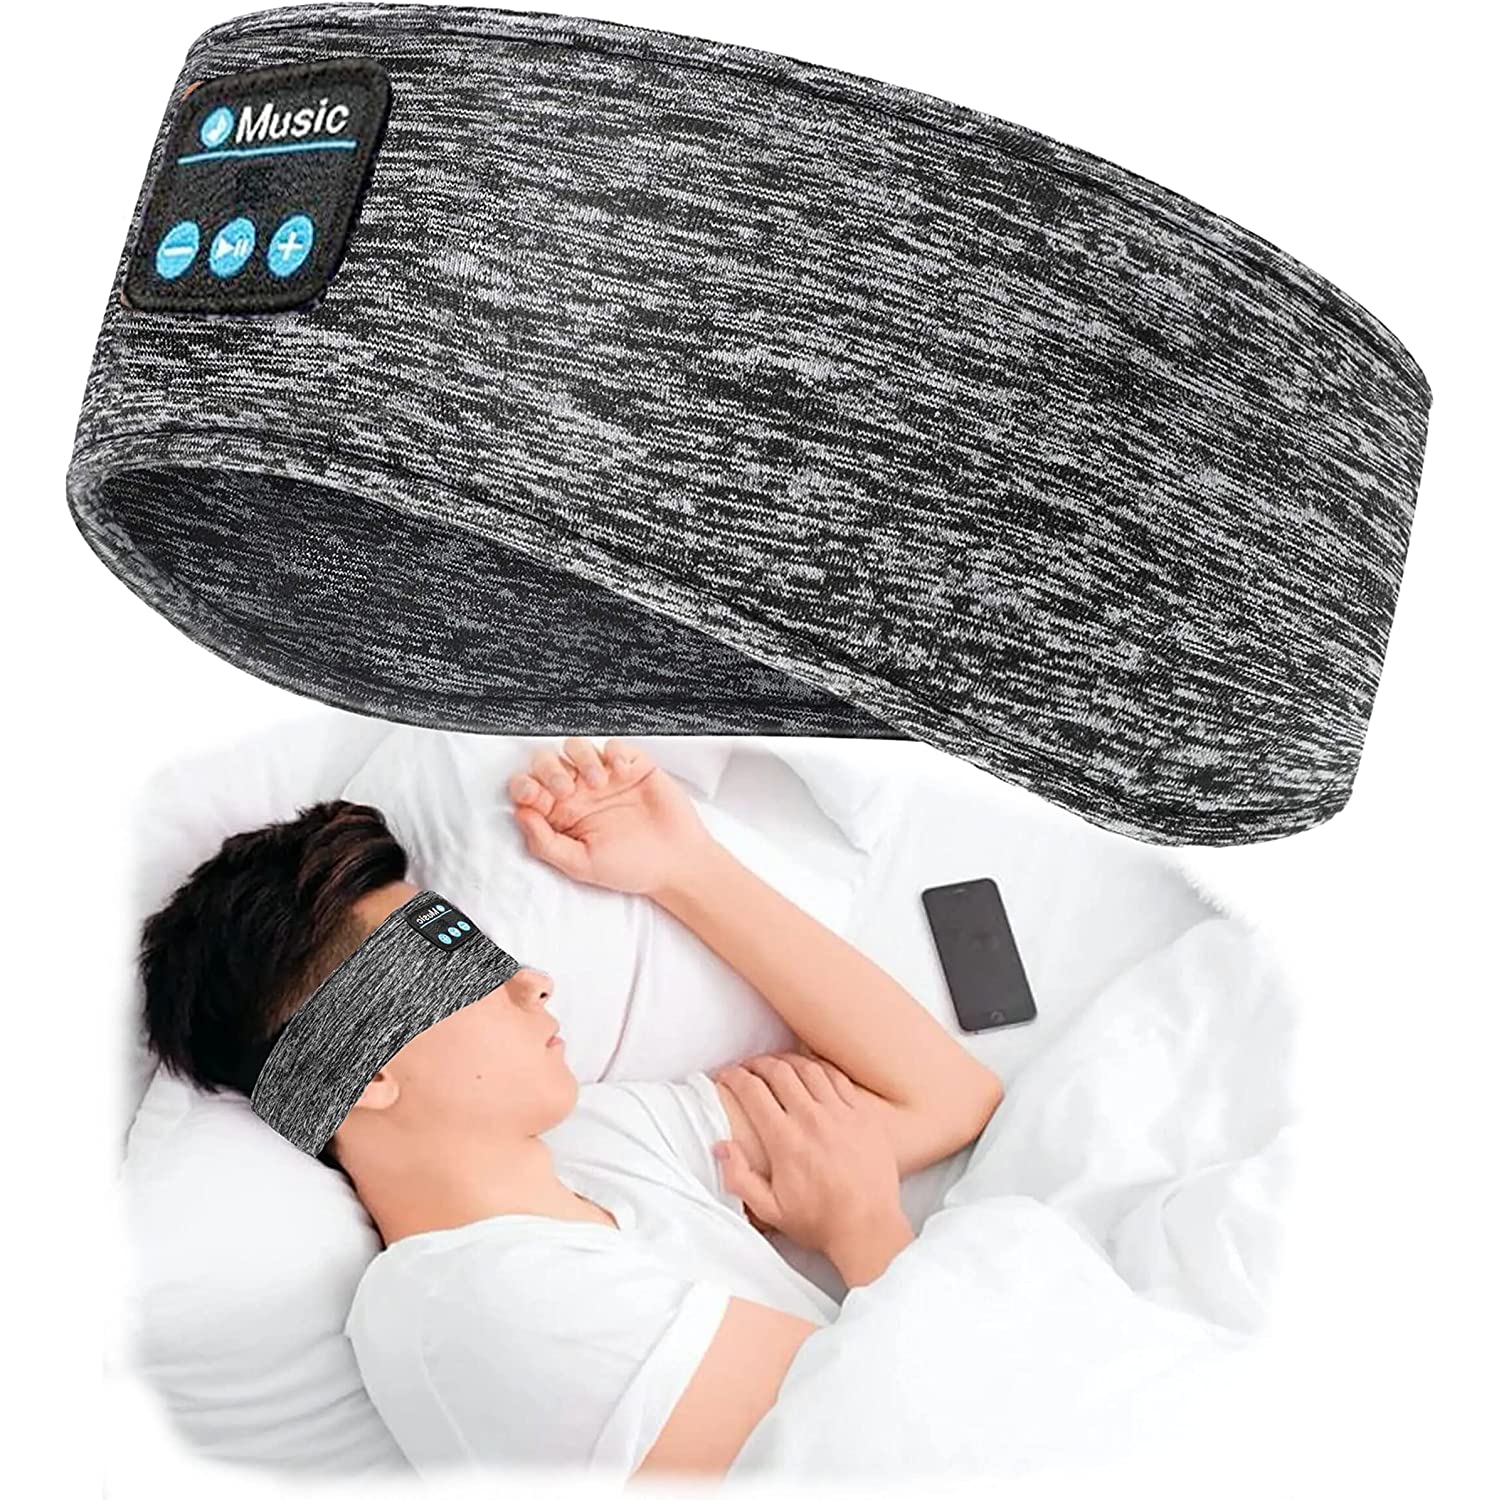 Dolaer Sleep Headphones Sports Bluetooth Headband, Soft Music Sleeping Wireless Earbuds Eye Mask with Thiner Headset, Breathable Headbands for Side Sleeper Workout Running Yoga Tra